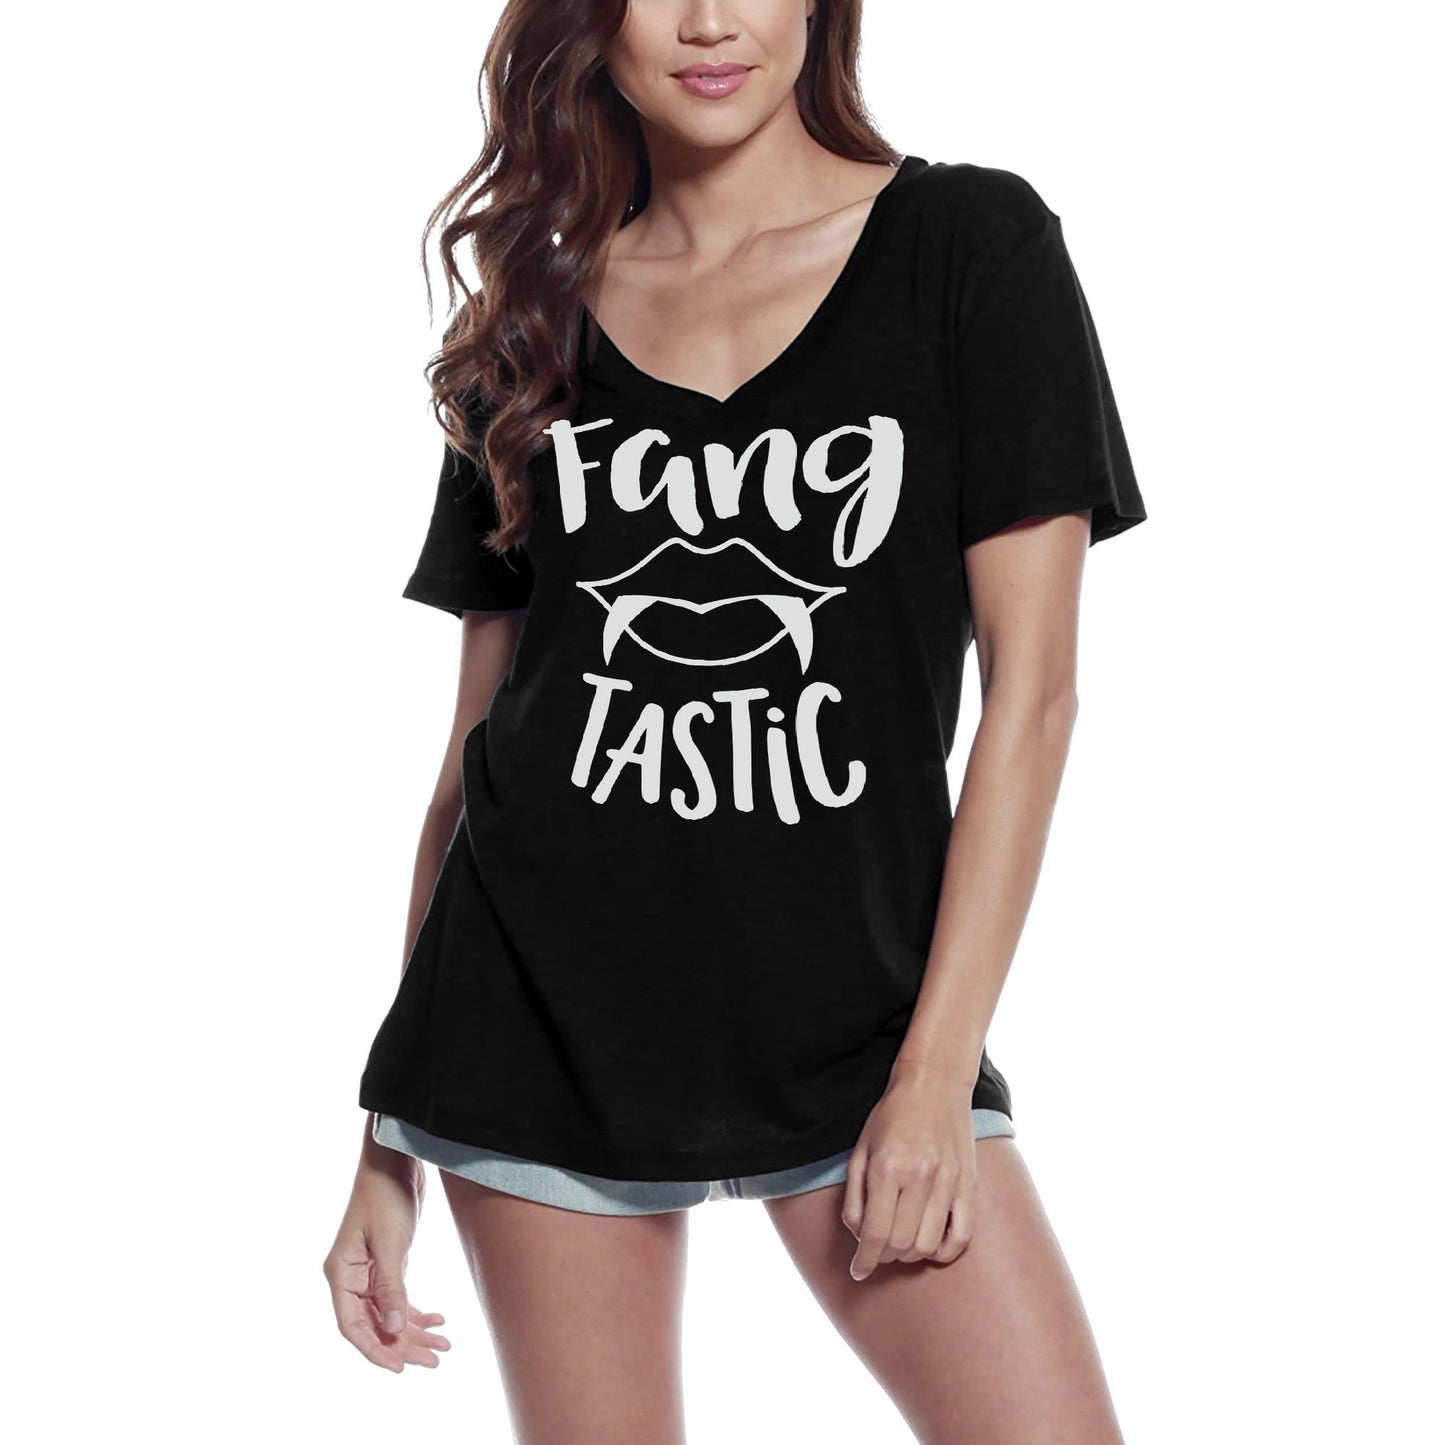 ULTRABASIC Women's T-Shirt Fang Tastic - Fantastic Short Sleeve Tee Shirt Tops